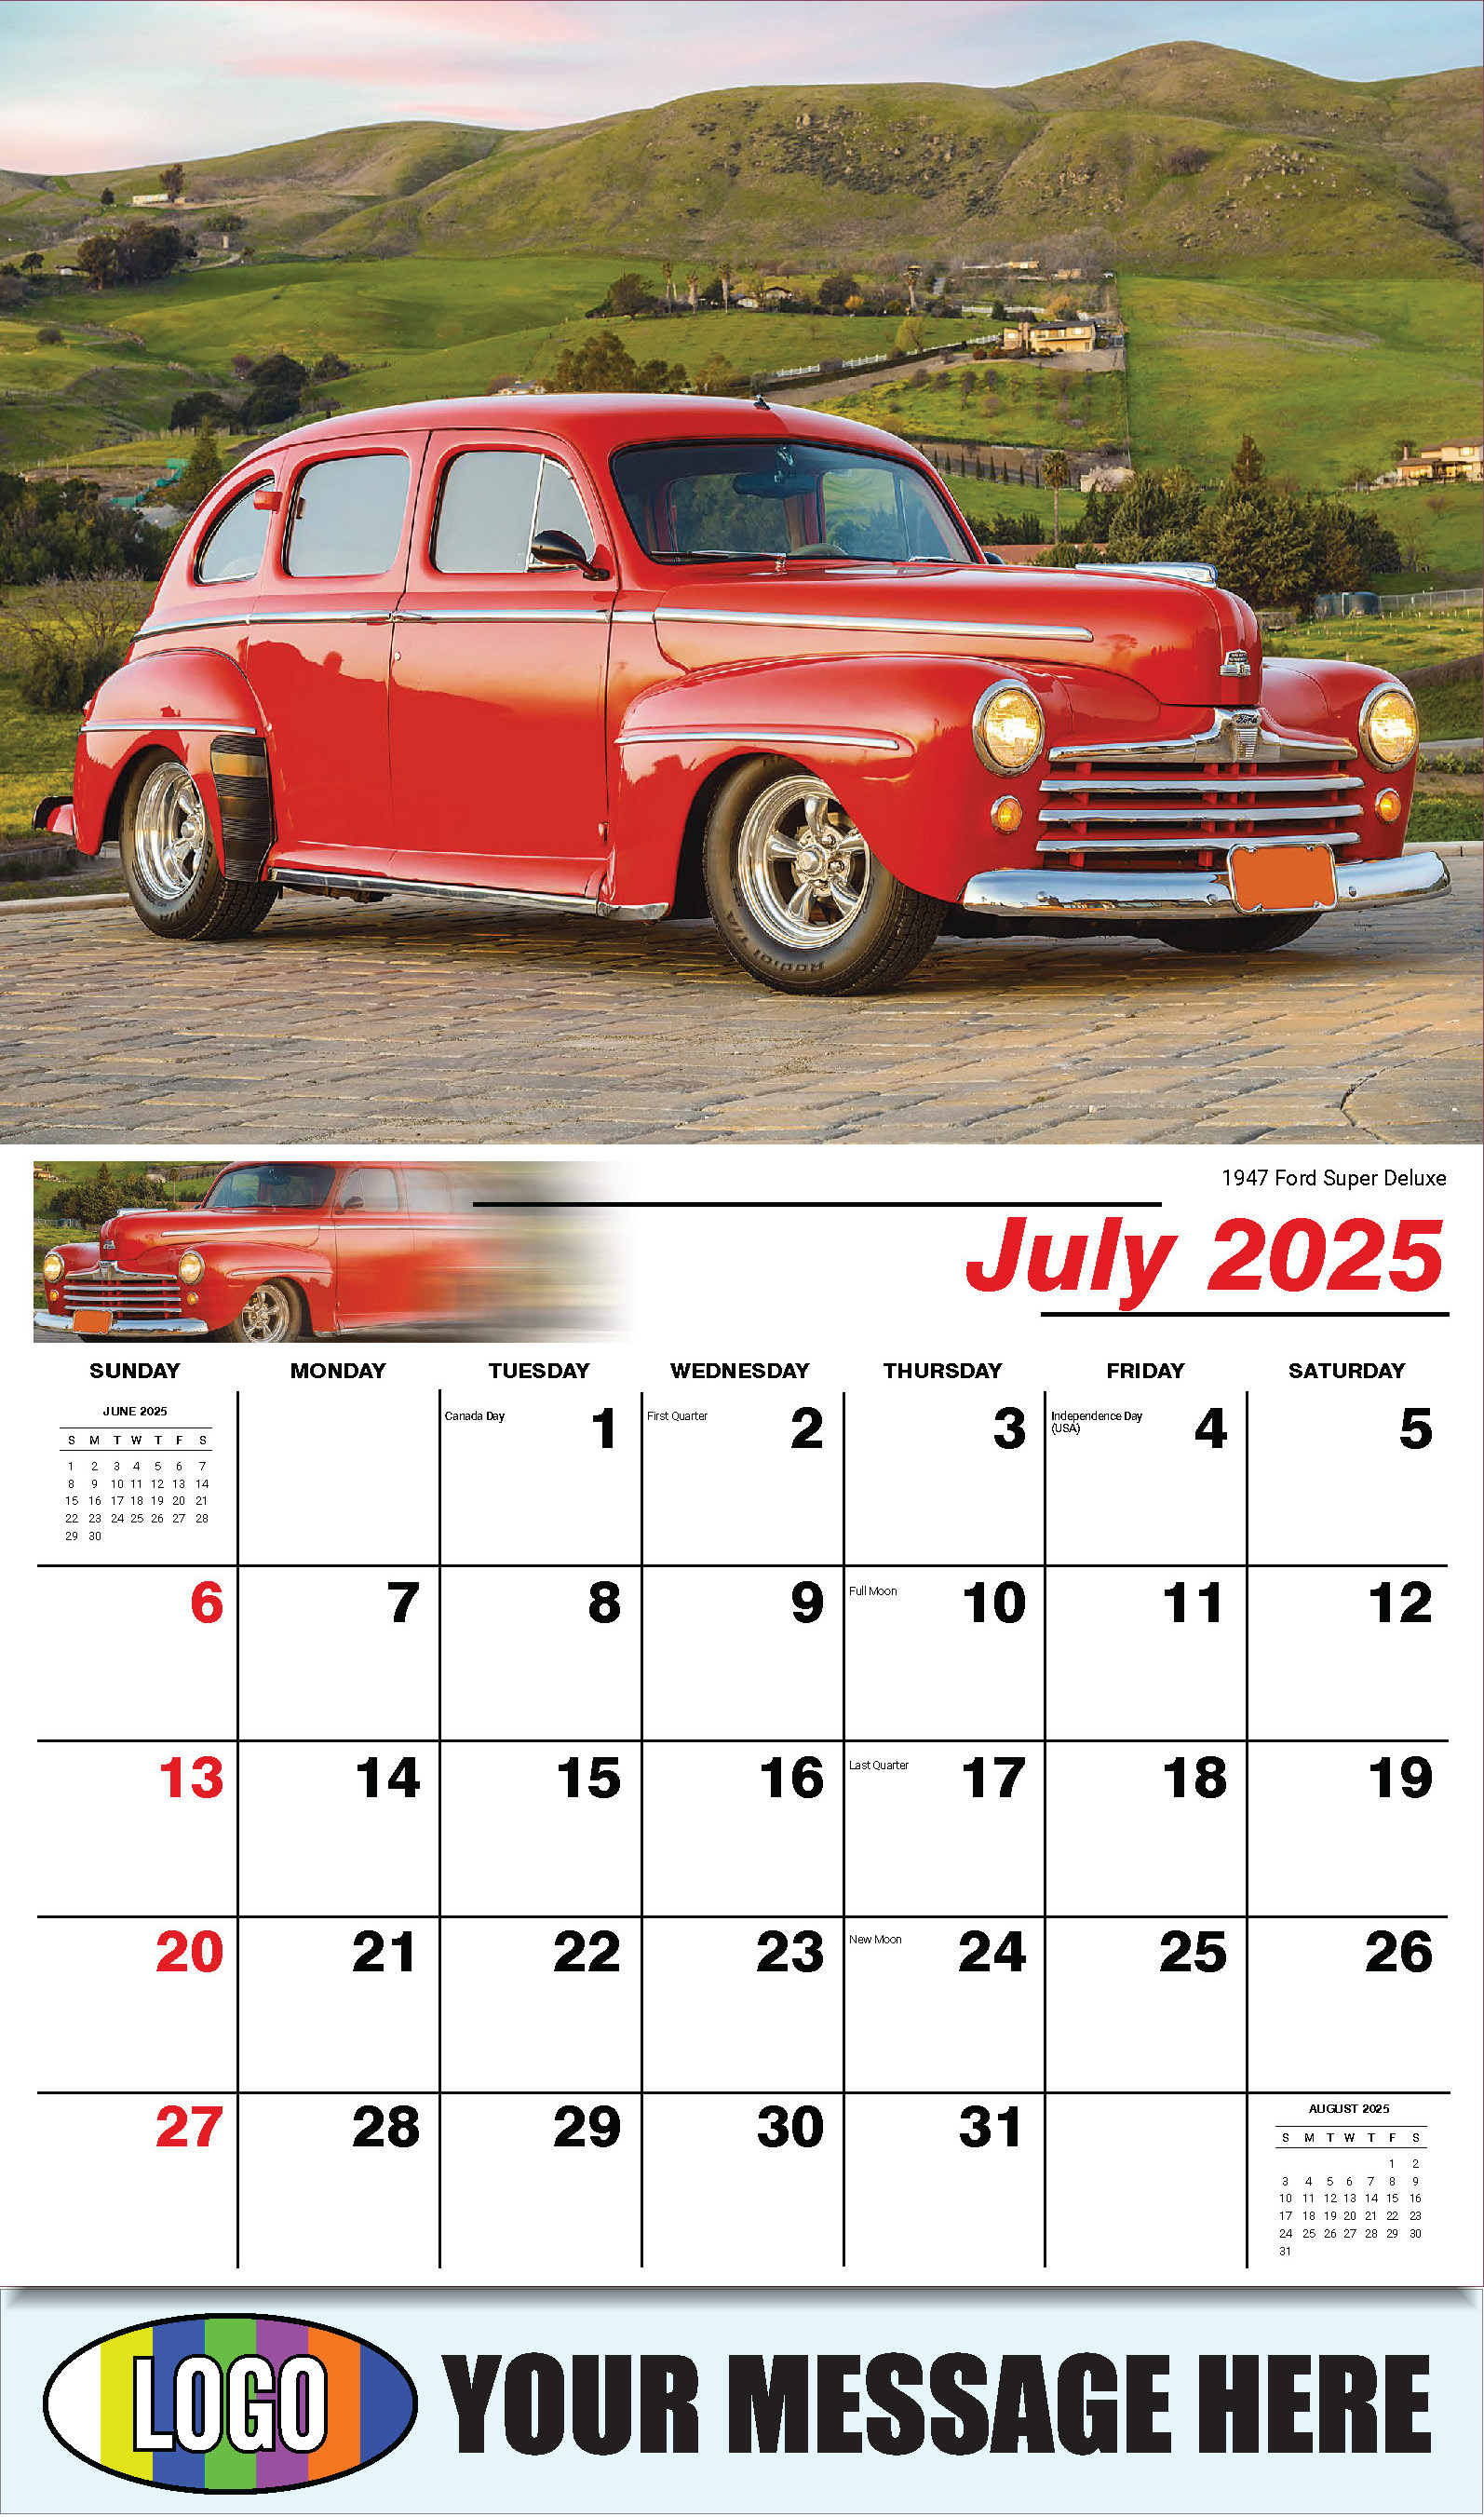 Henry's Heritage FORD Cars 2025 Automotive Business Promo Calendar - July